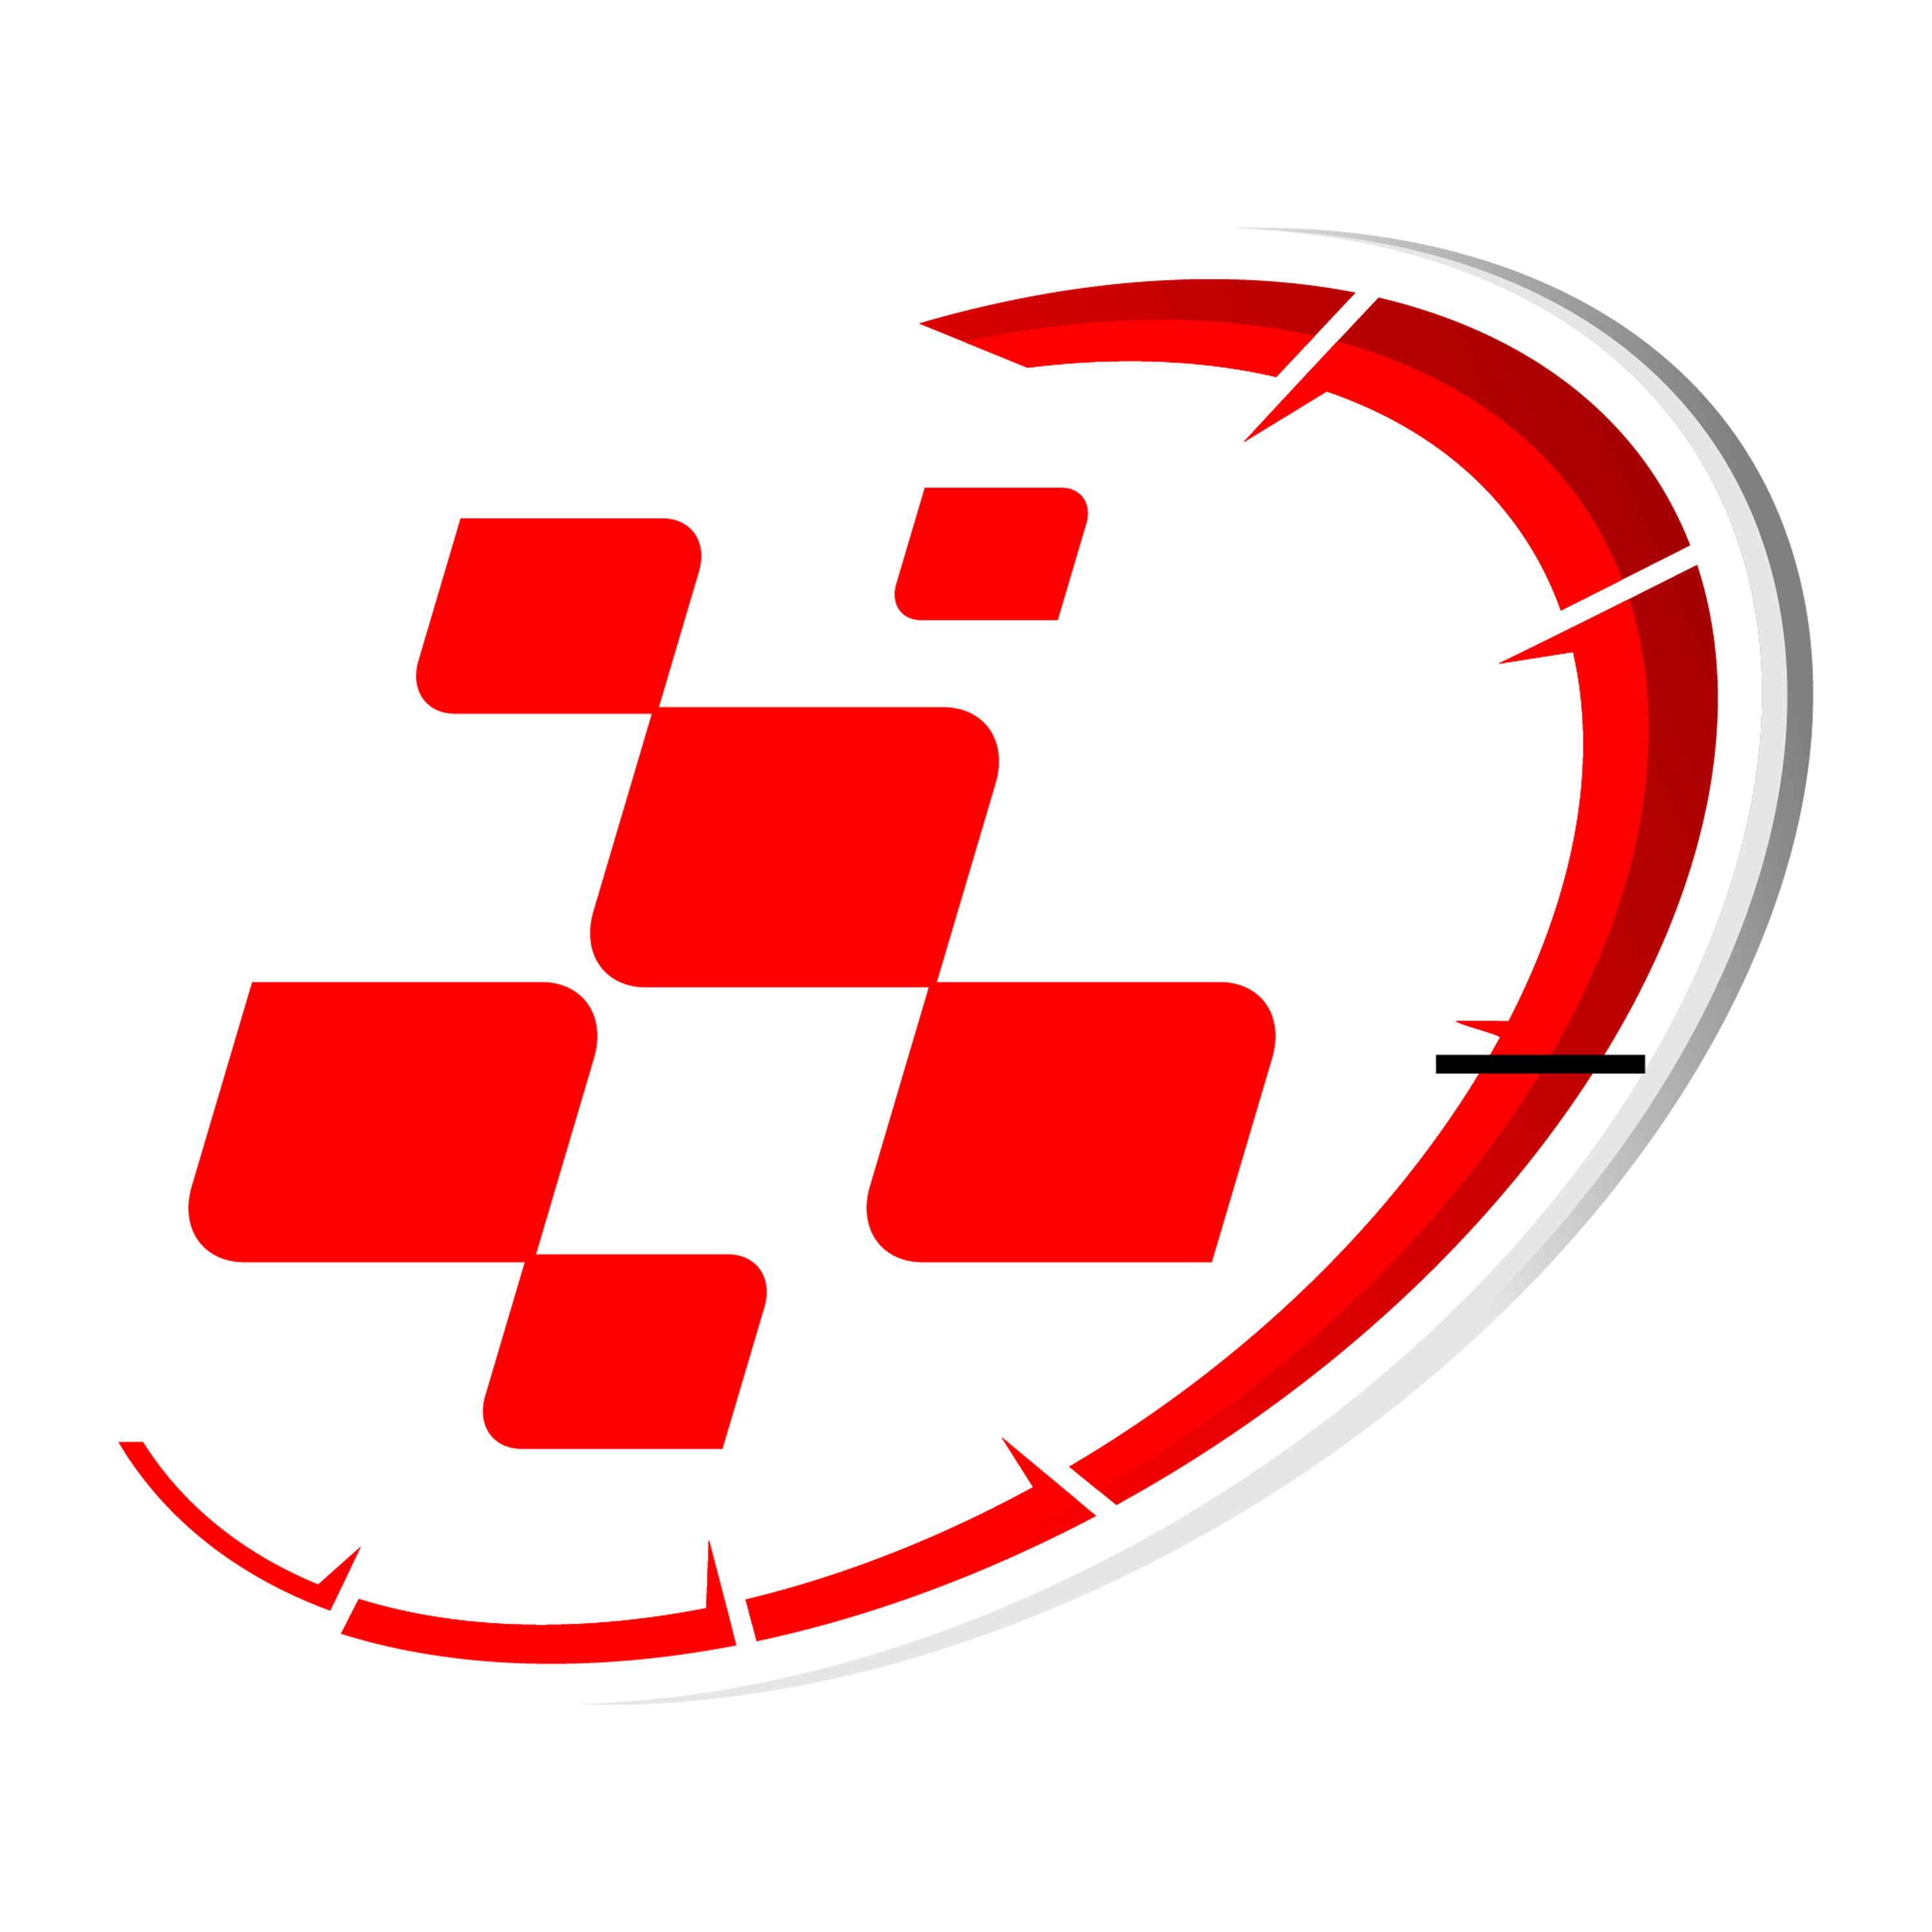 OSD Logo